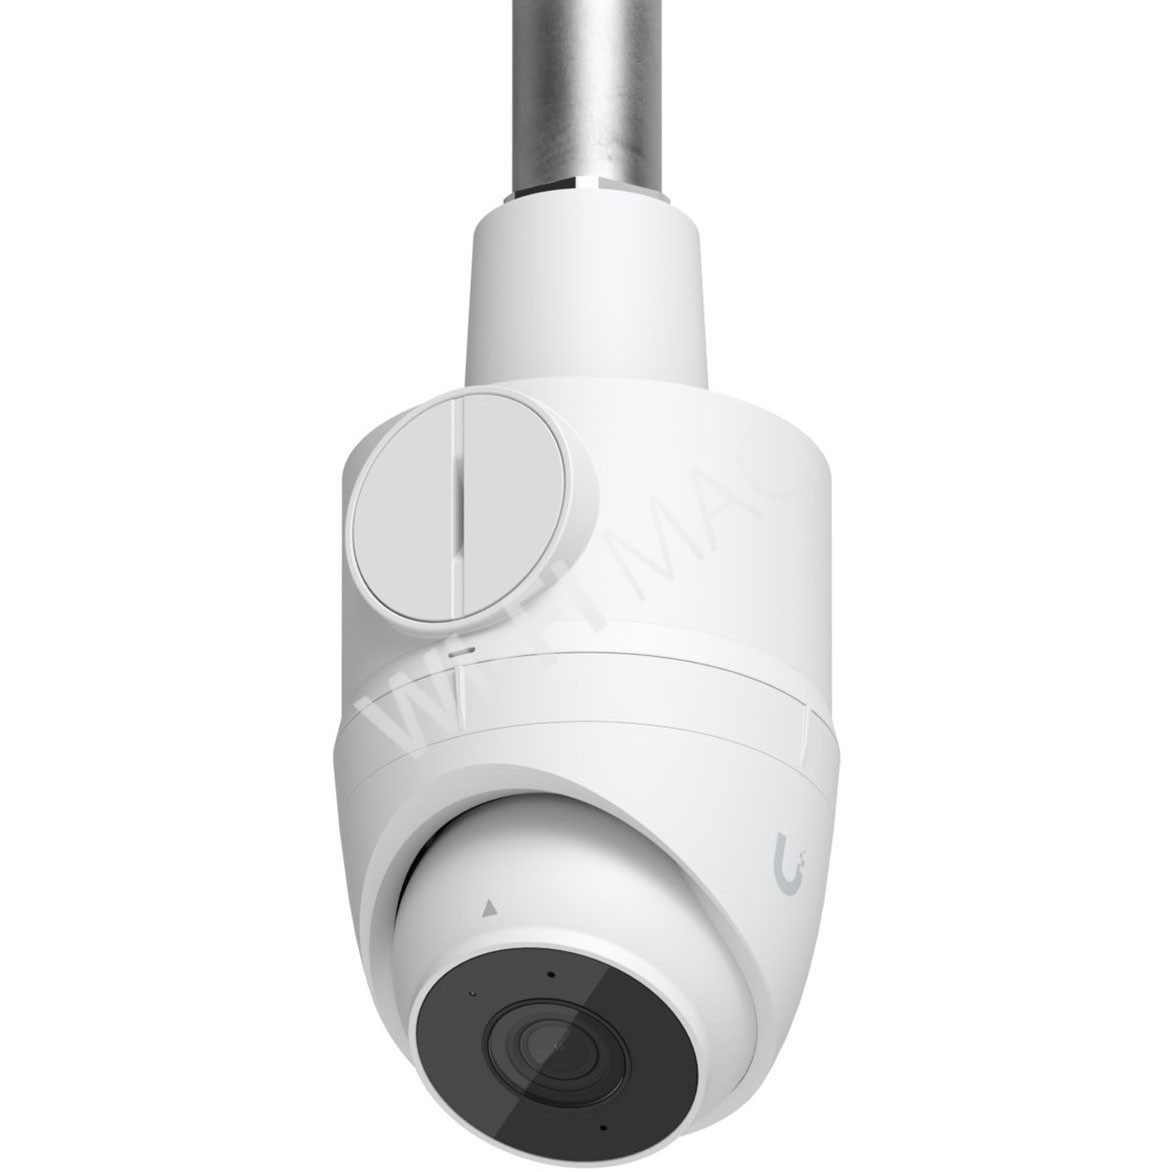 Ubiquiti UniFi Camera Compact Junction Box, монтажная коробка для камер UVC-G5-Dome-Ultra и UVC-G5-Turret-Ultra